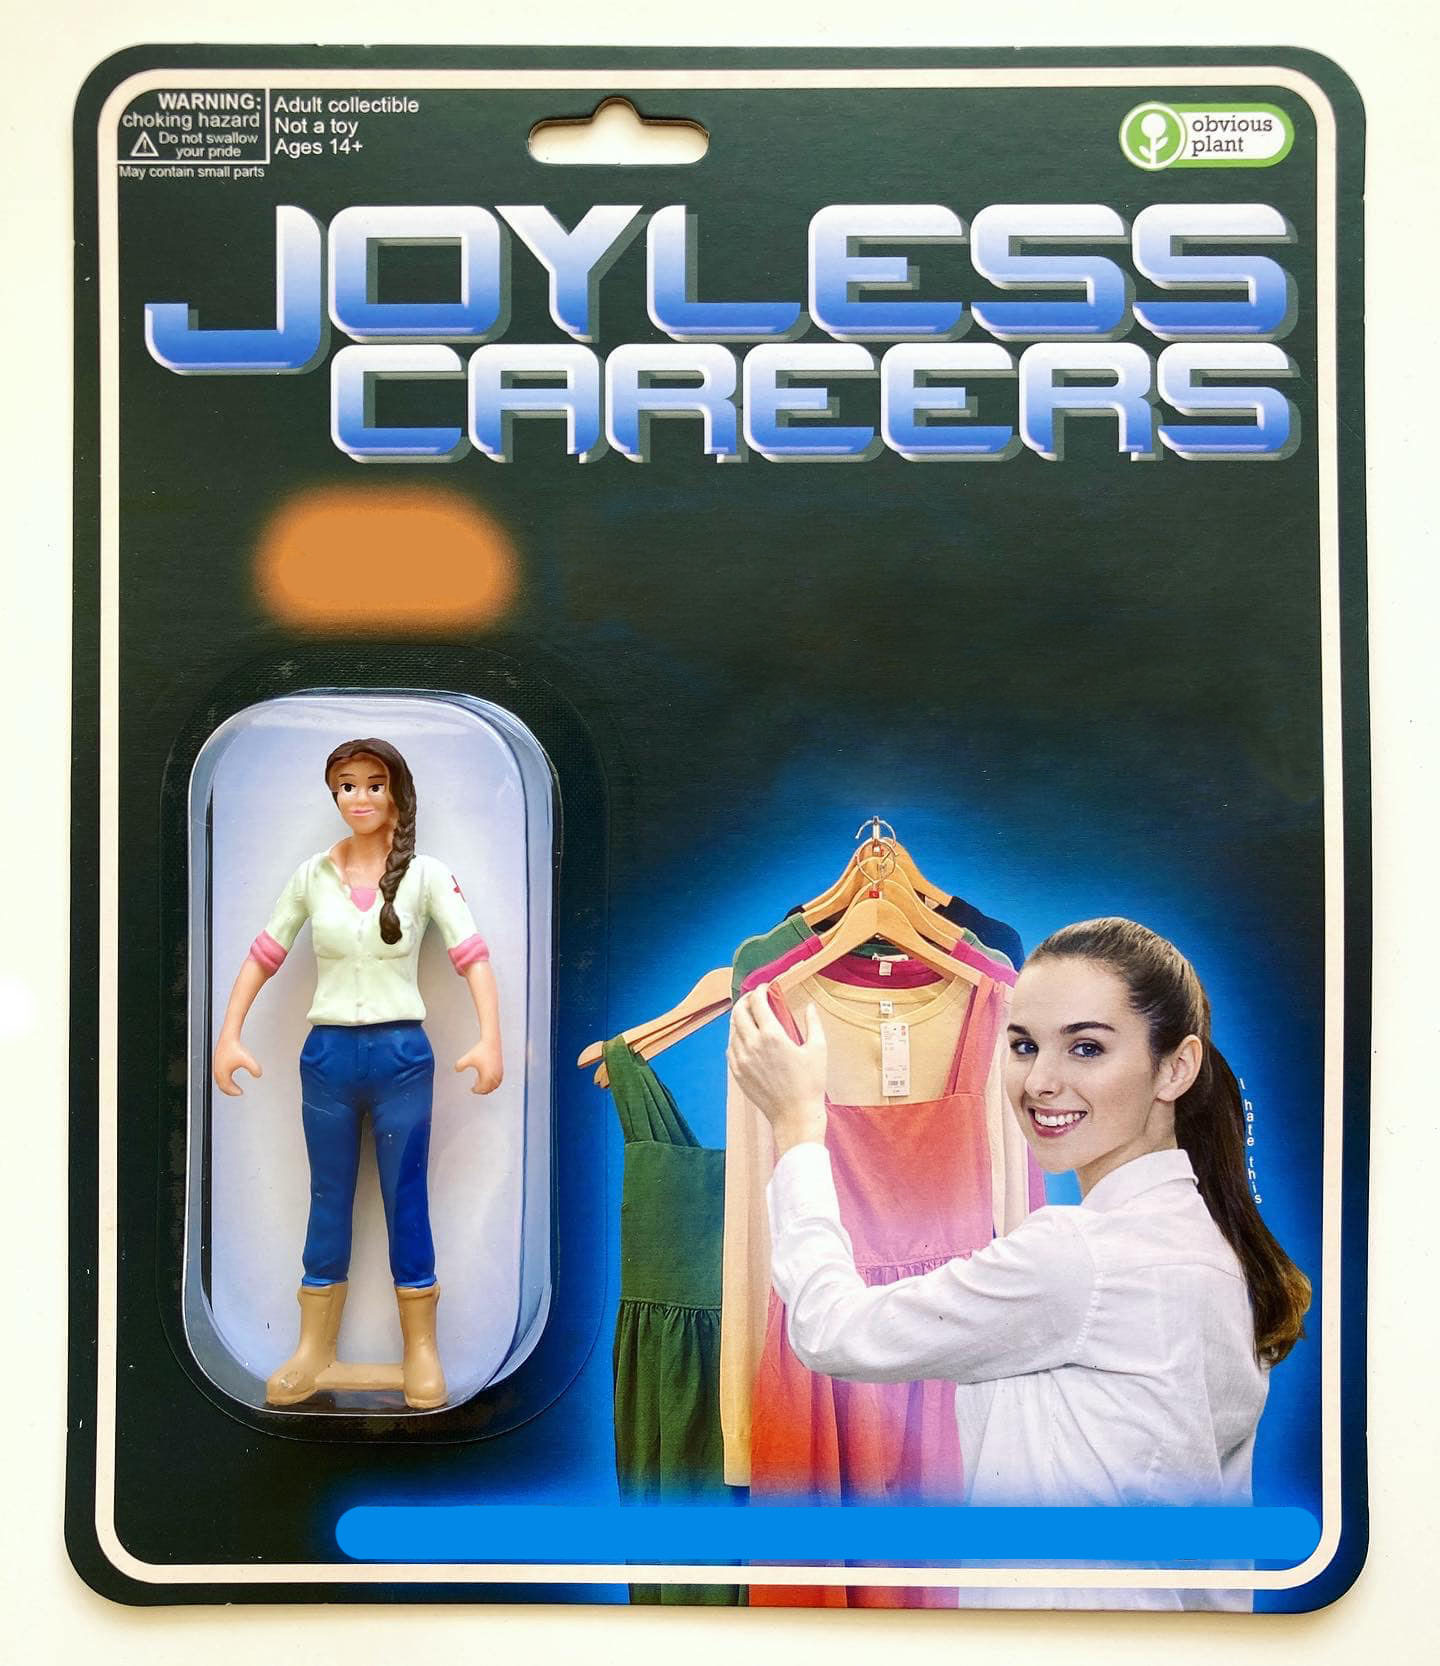 joyless careers Blank Meme Template